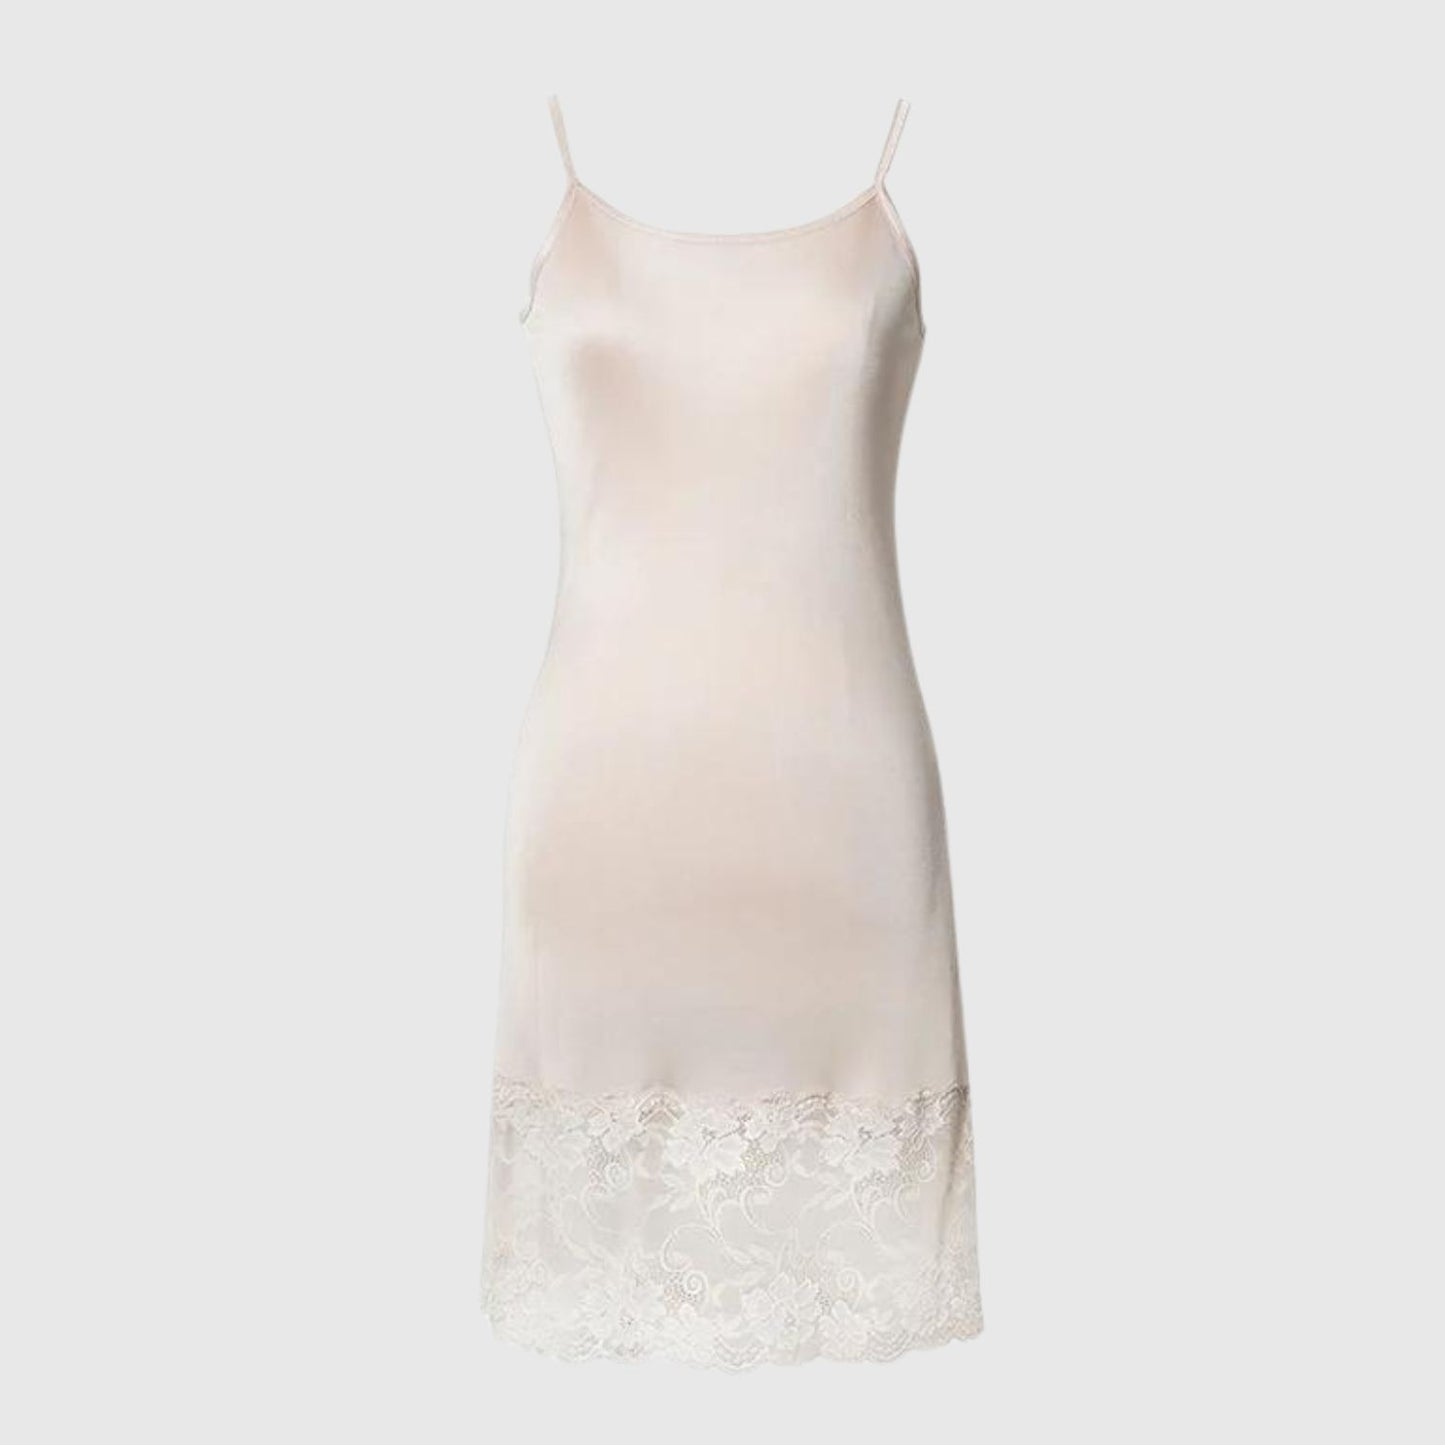 silk slip dress with lace bottom hem